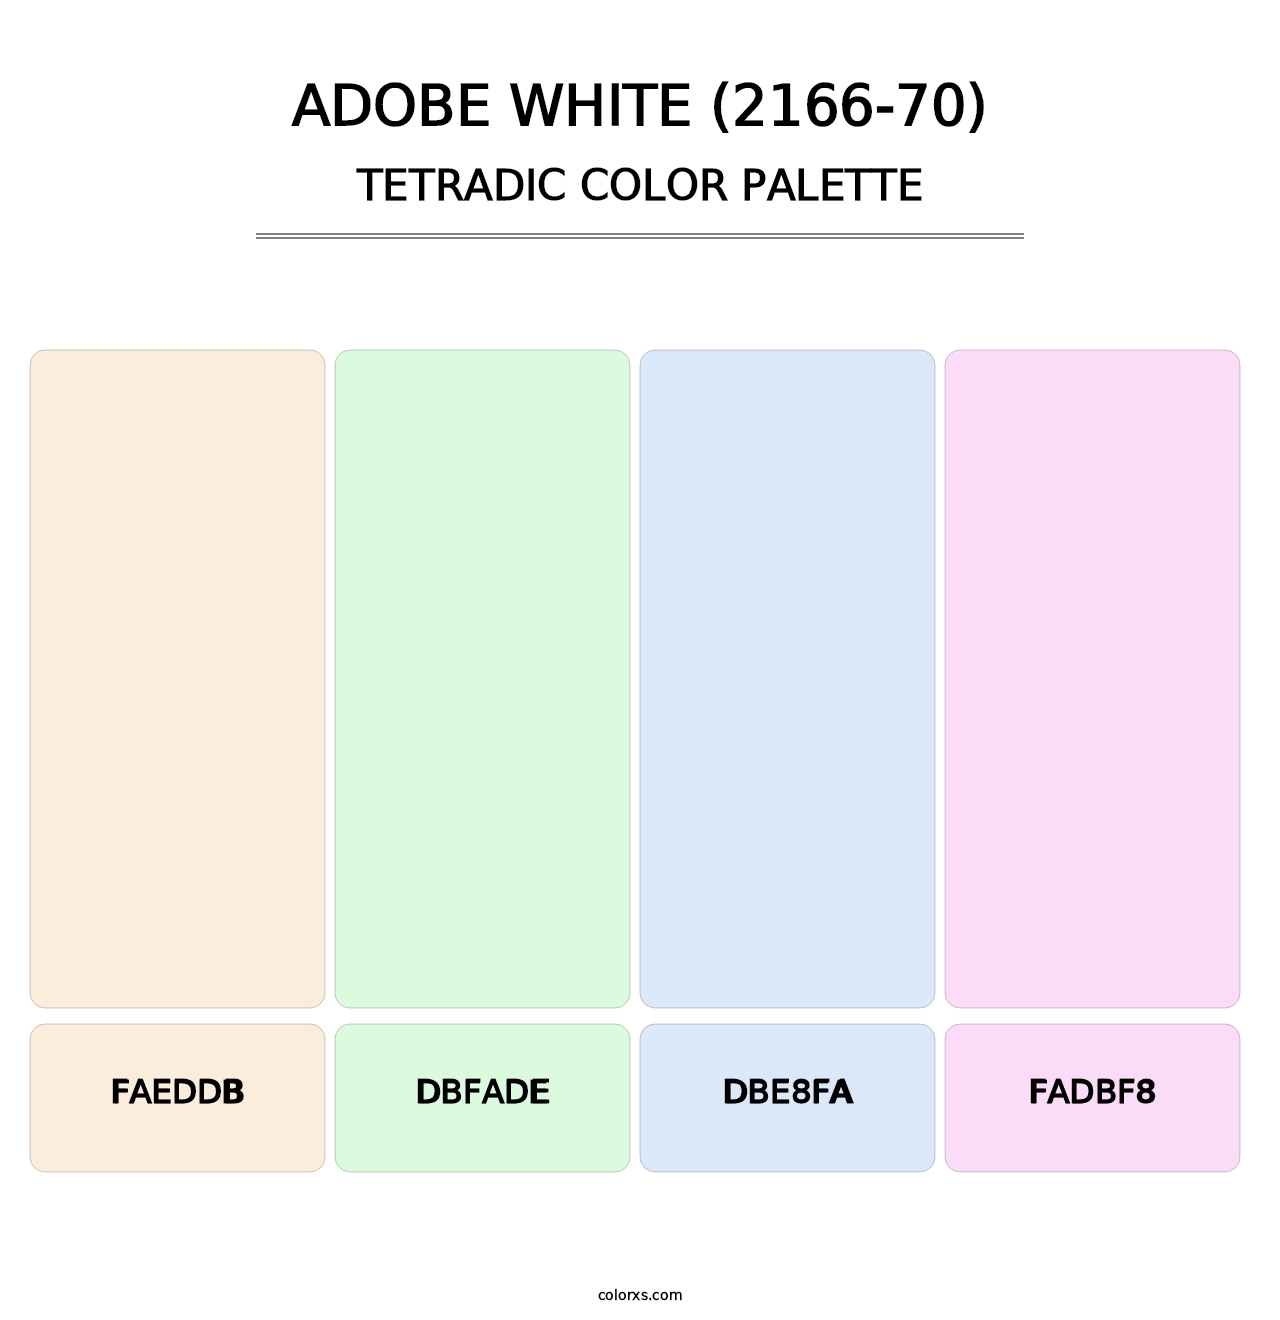 Adobe White (2166-70) - Tetradic Color Palette